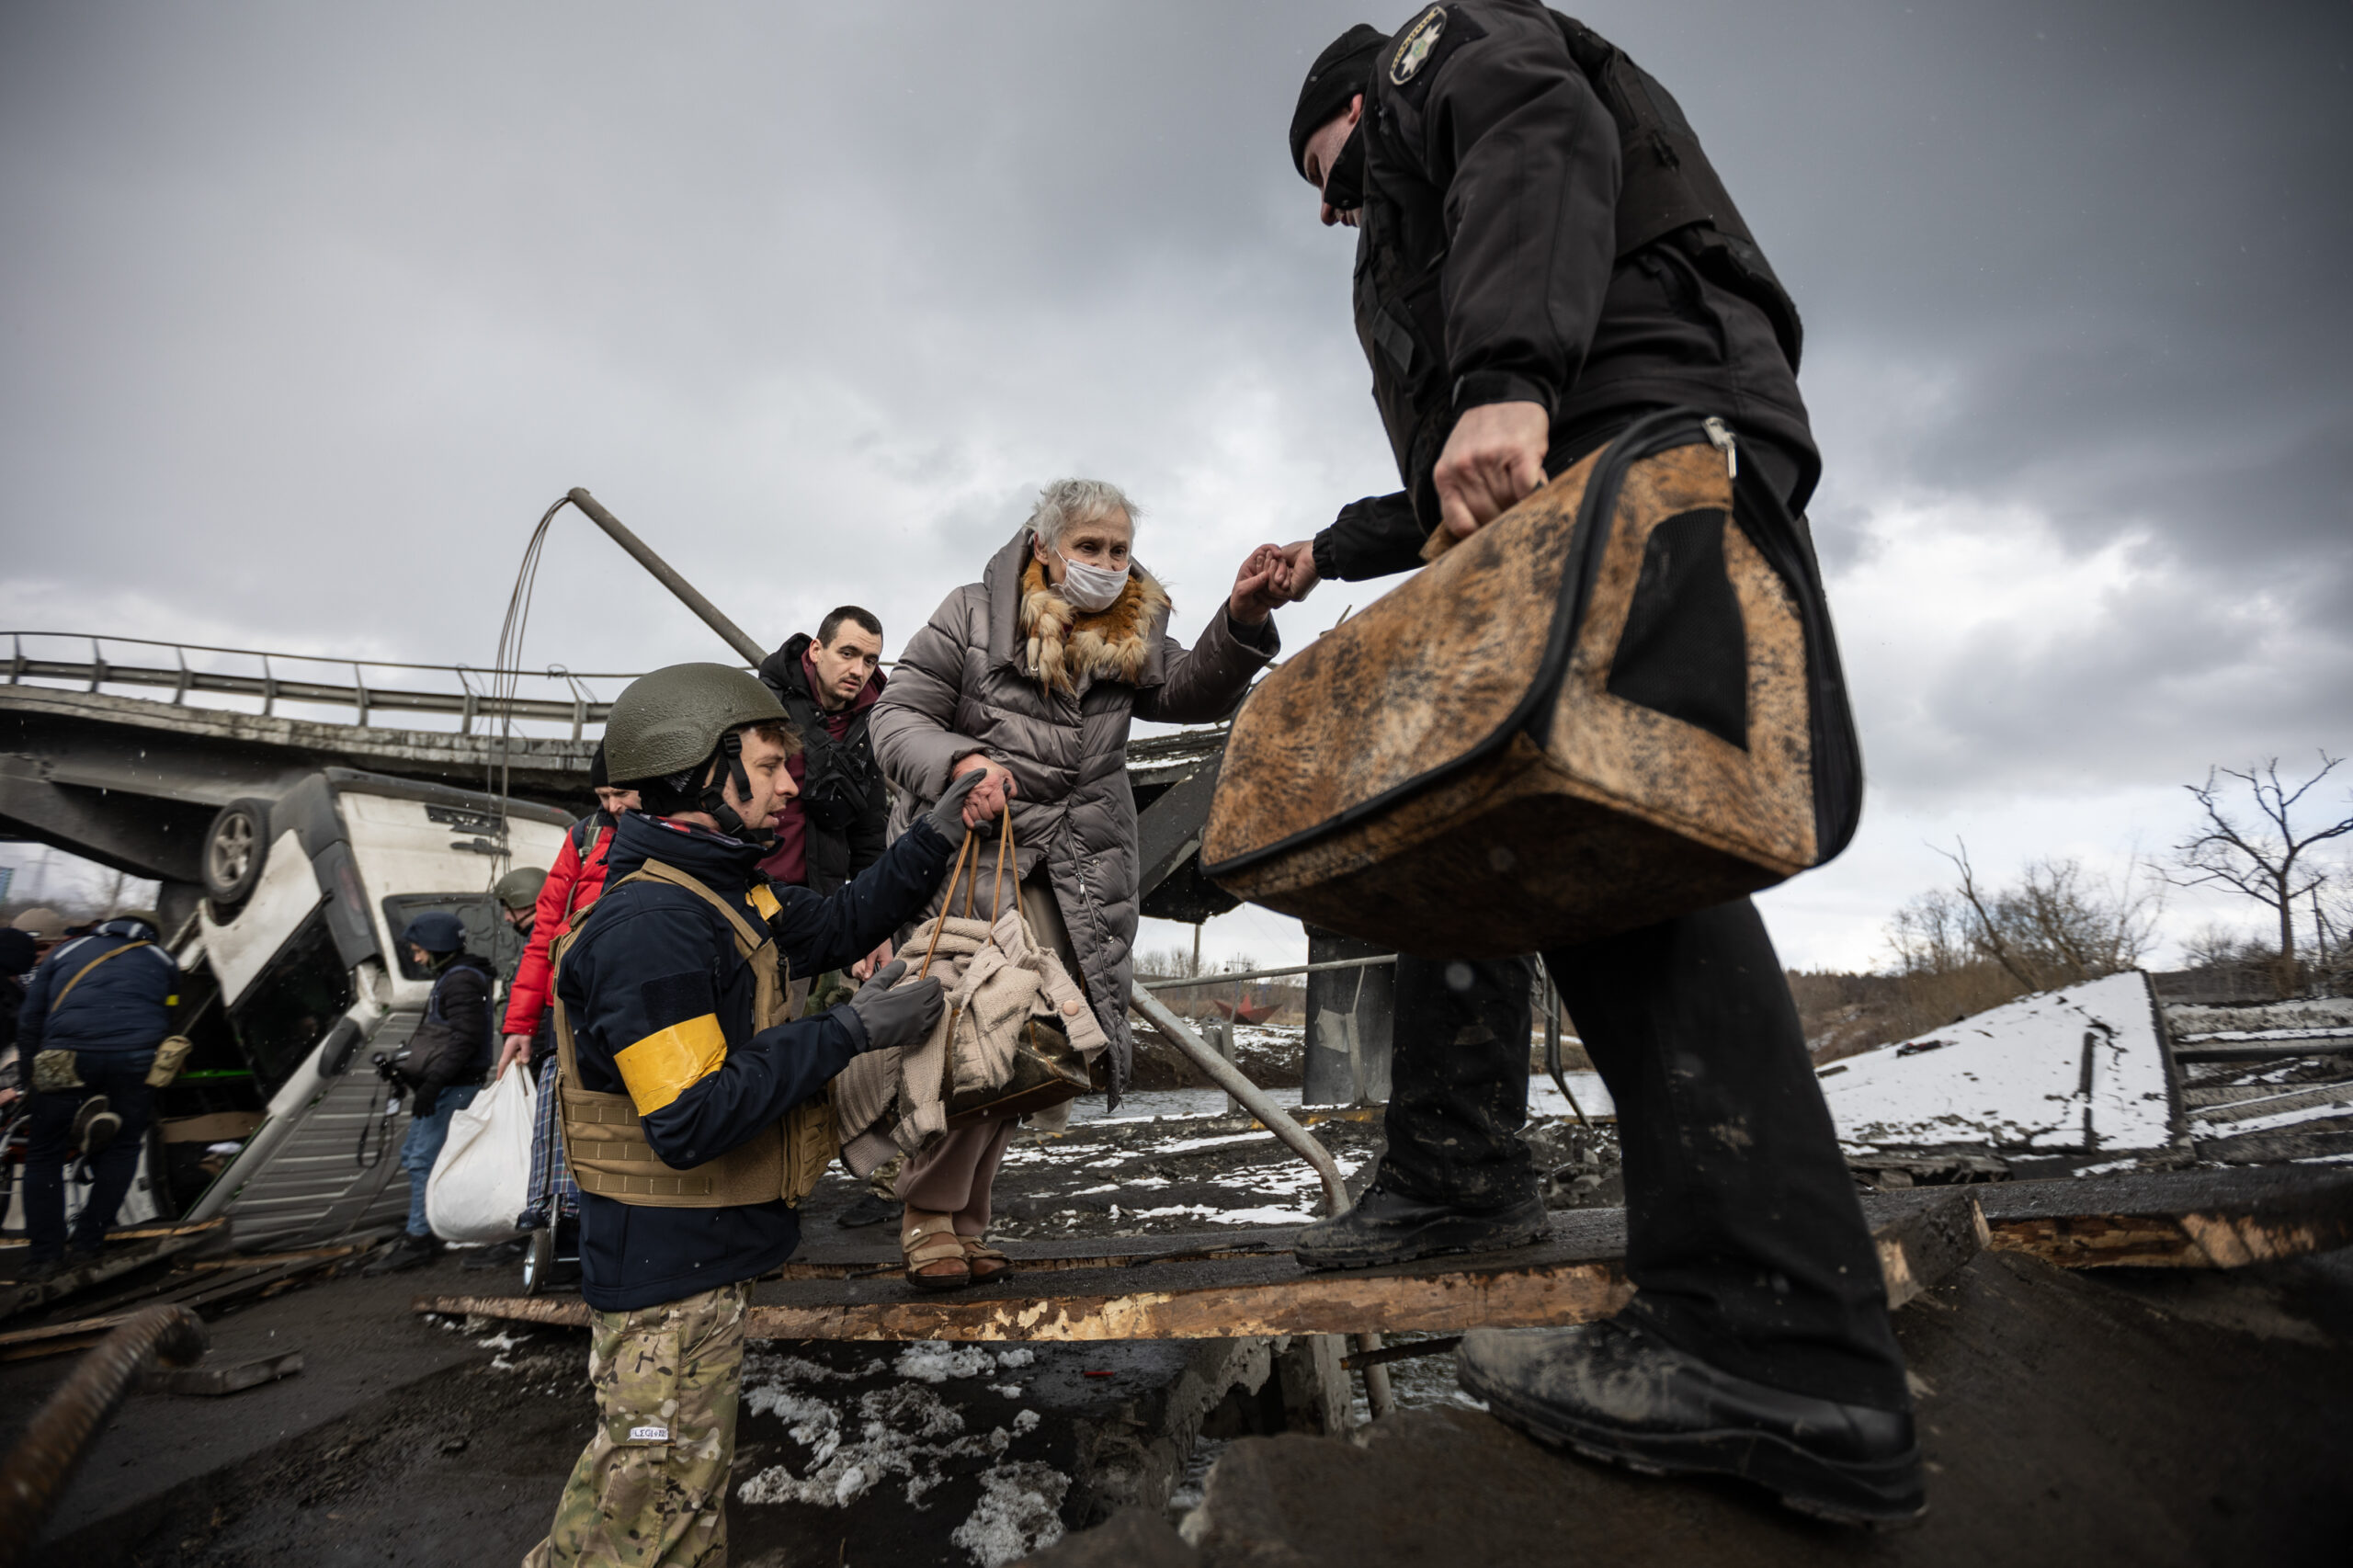 Ukraine: Humanitarian corridors for civilians fleeing Russian attacks must provide safety – new testimonies